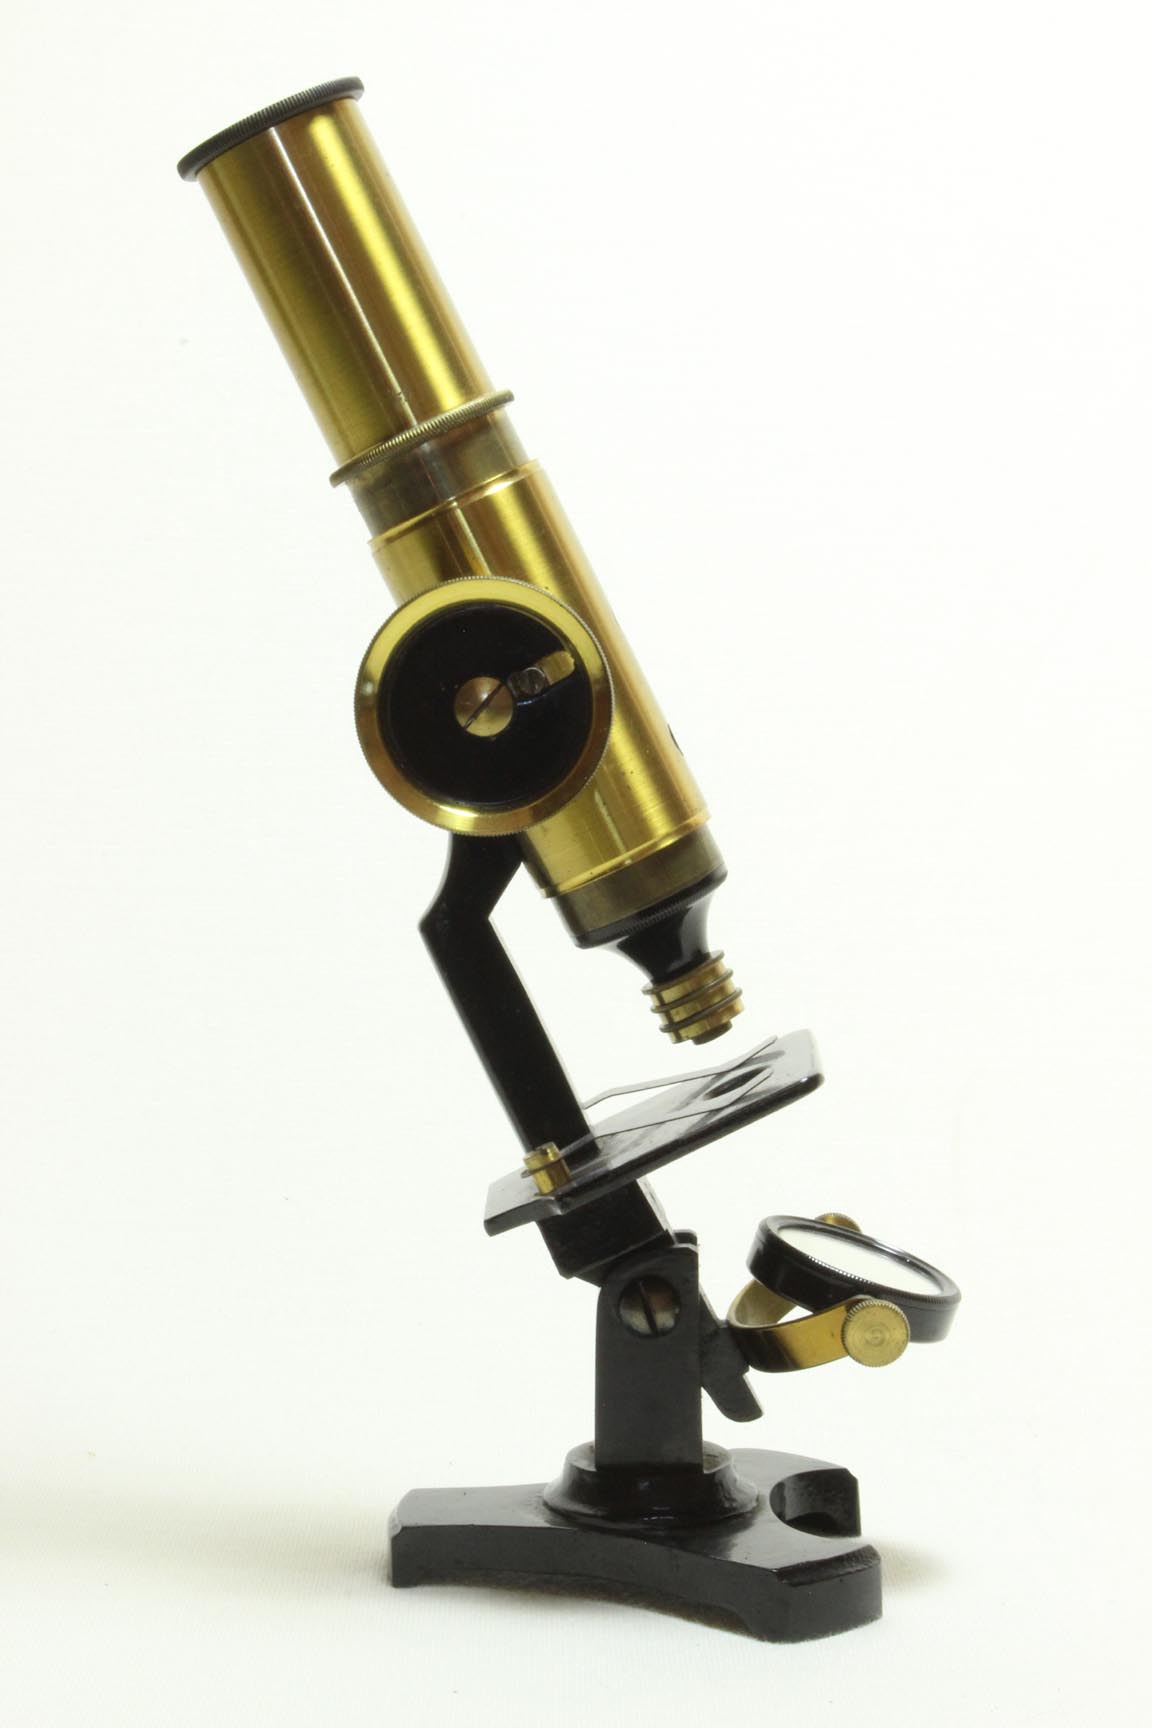 ACME Microscope